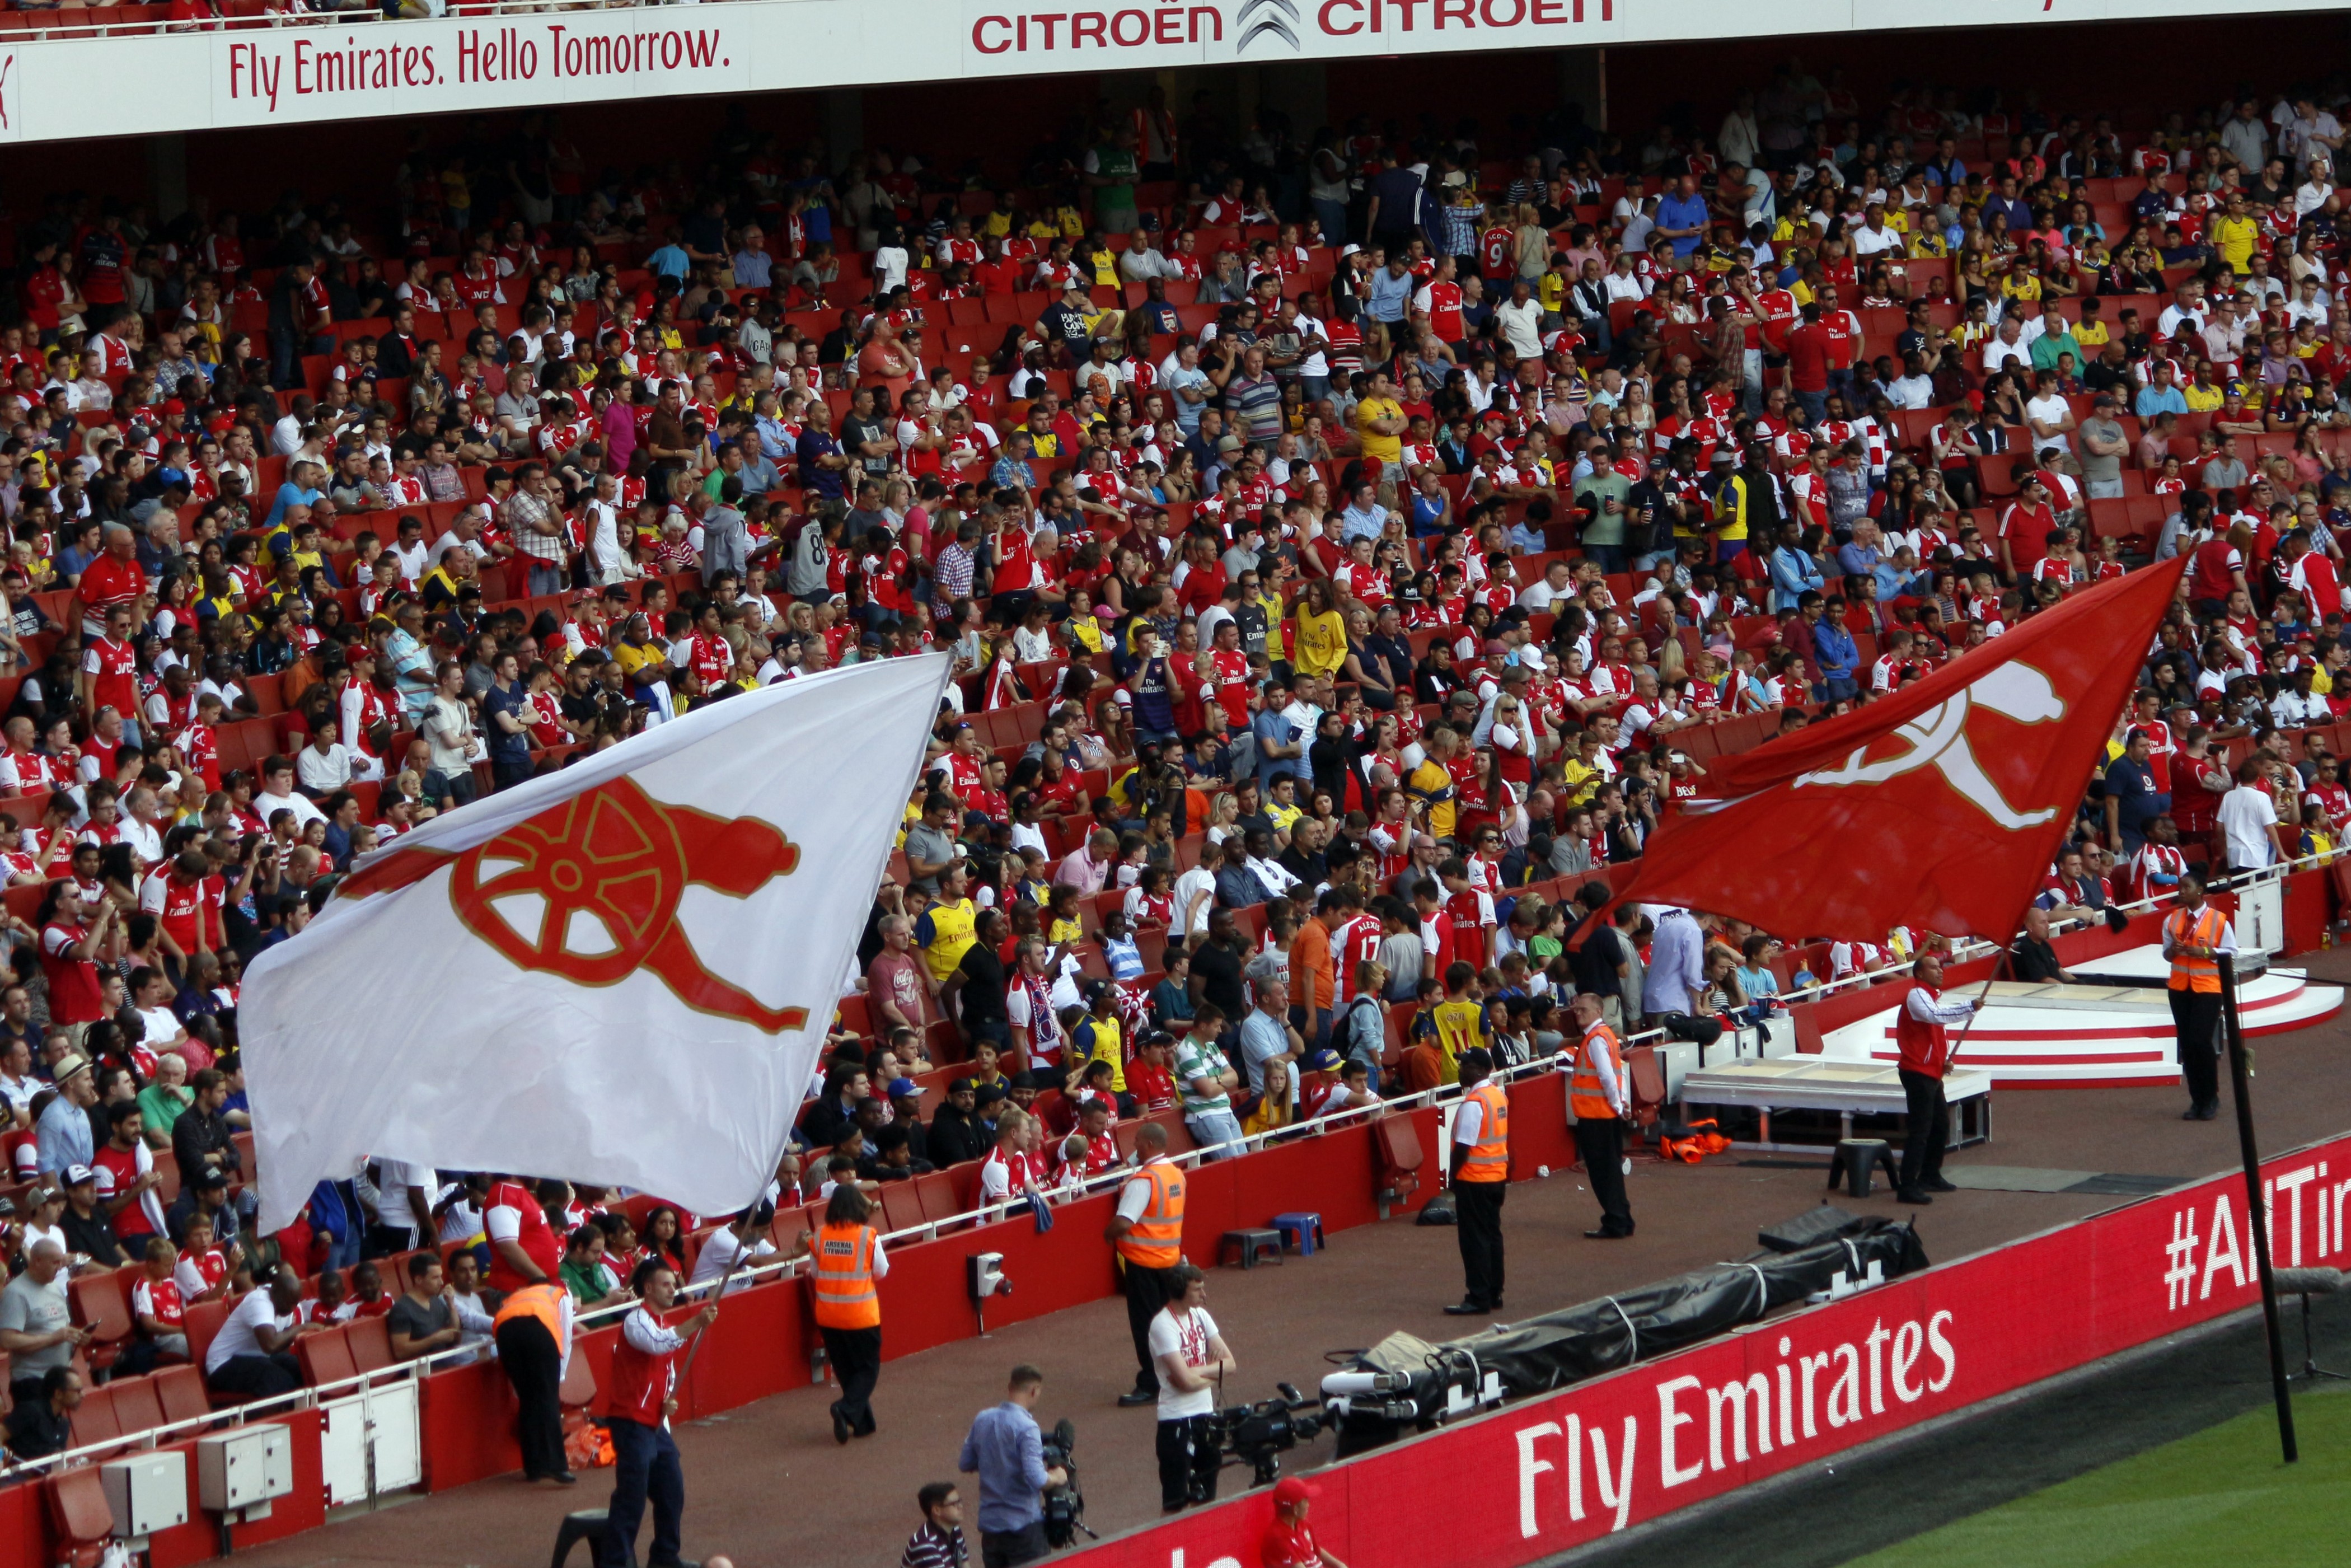 Arsenal chief executive Ivan Gazidis to depart the Gunners